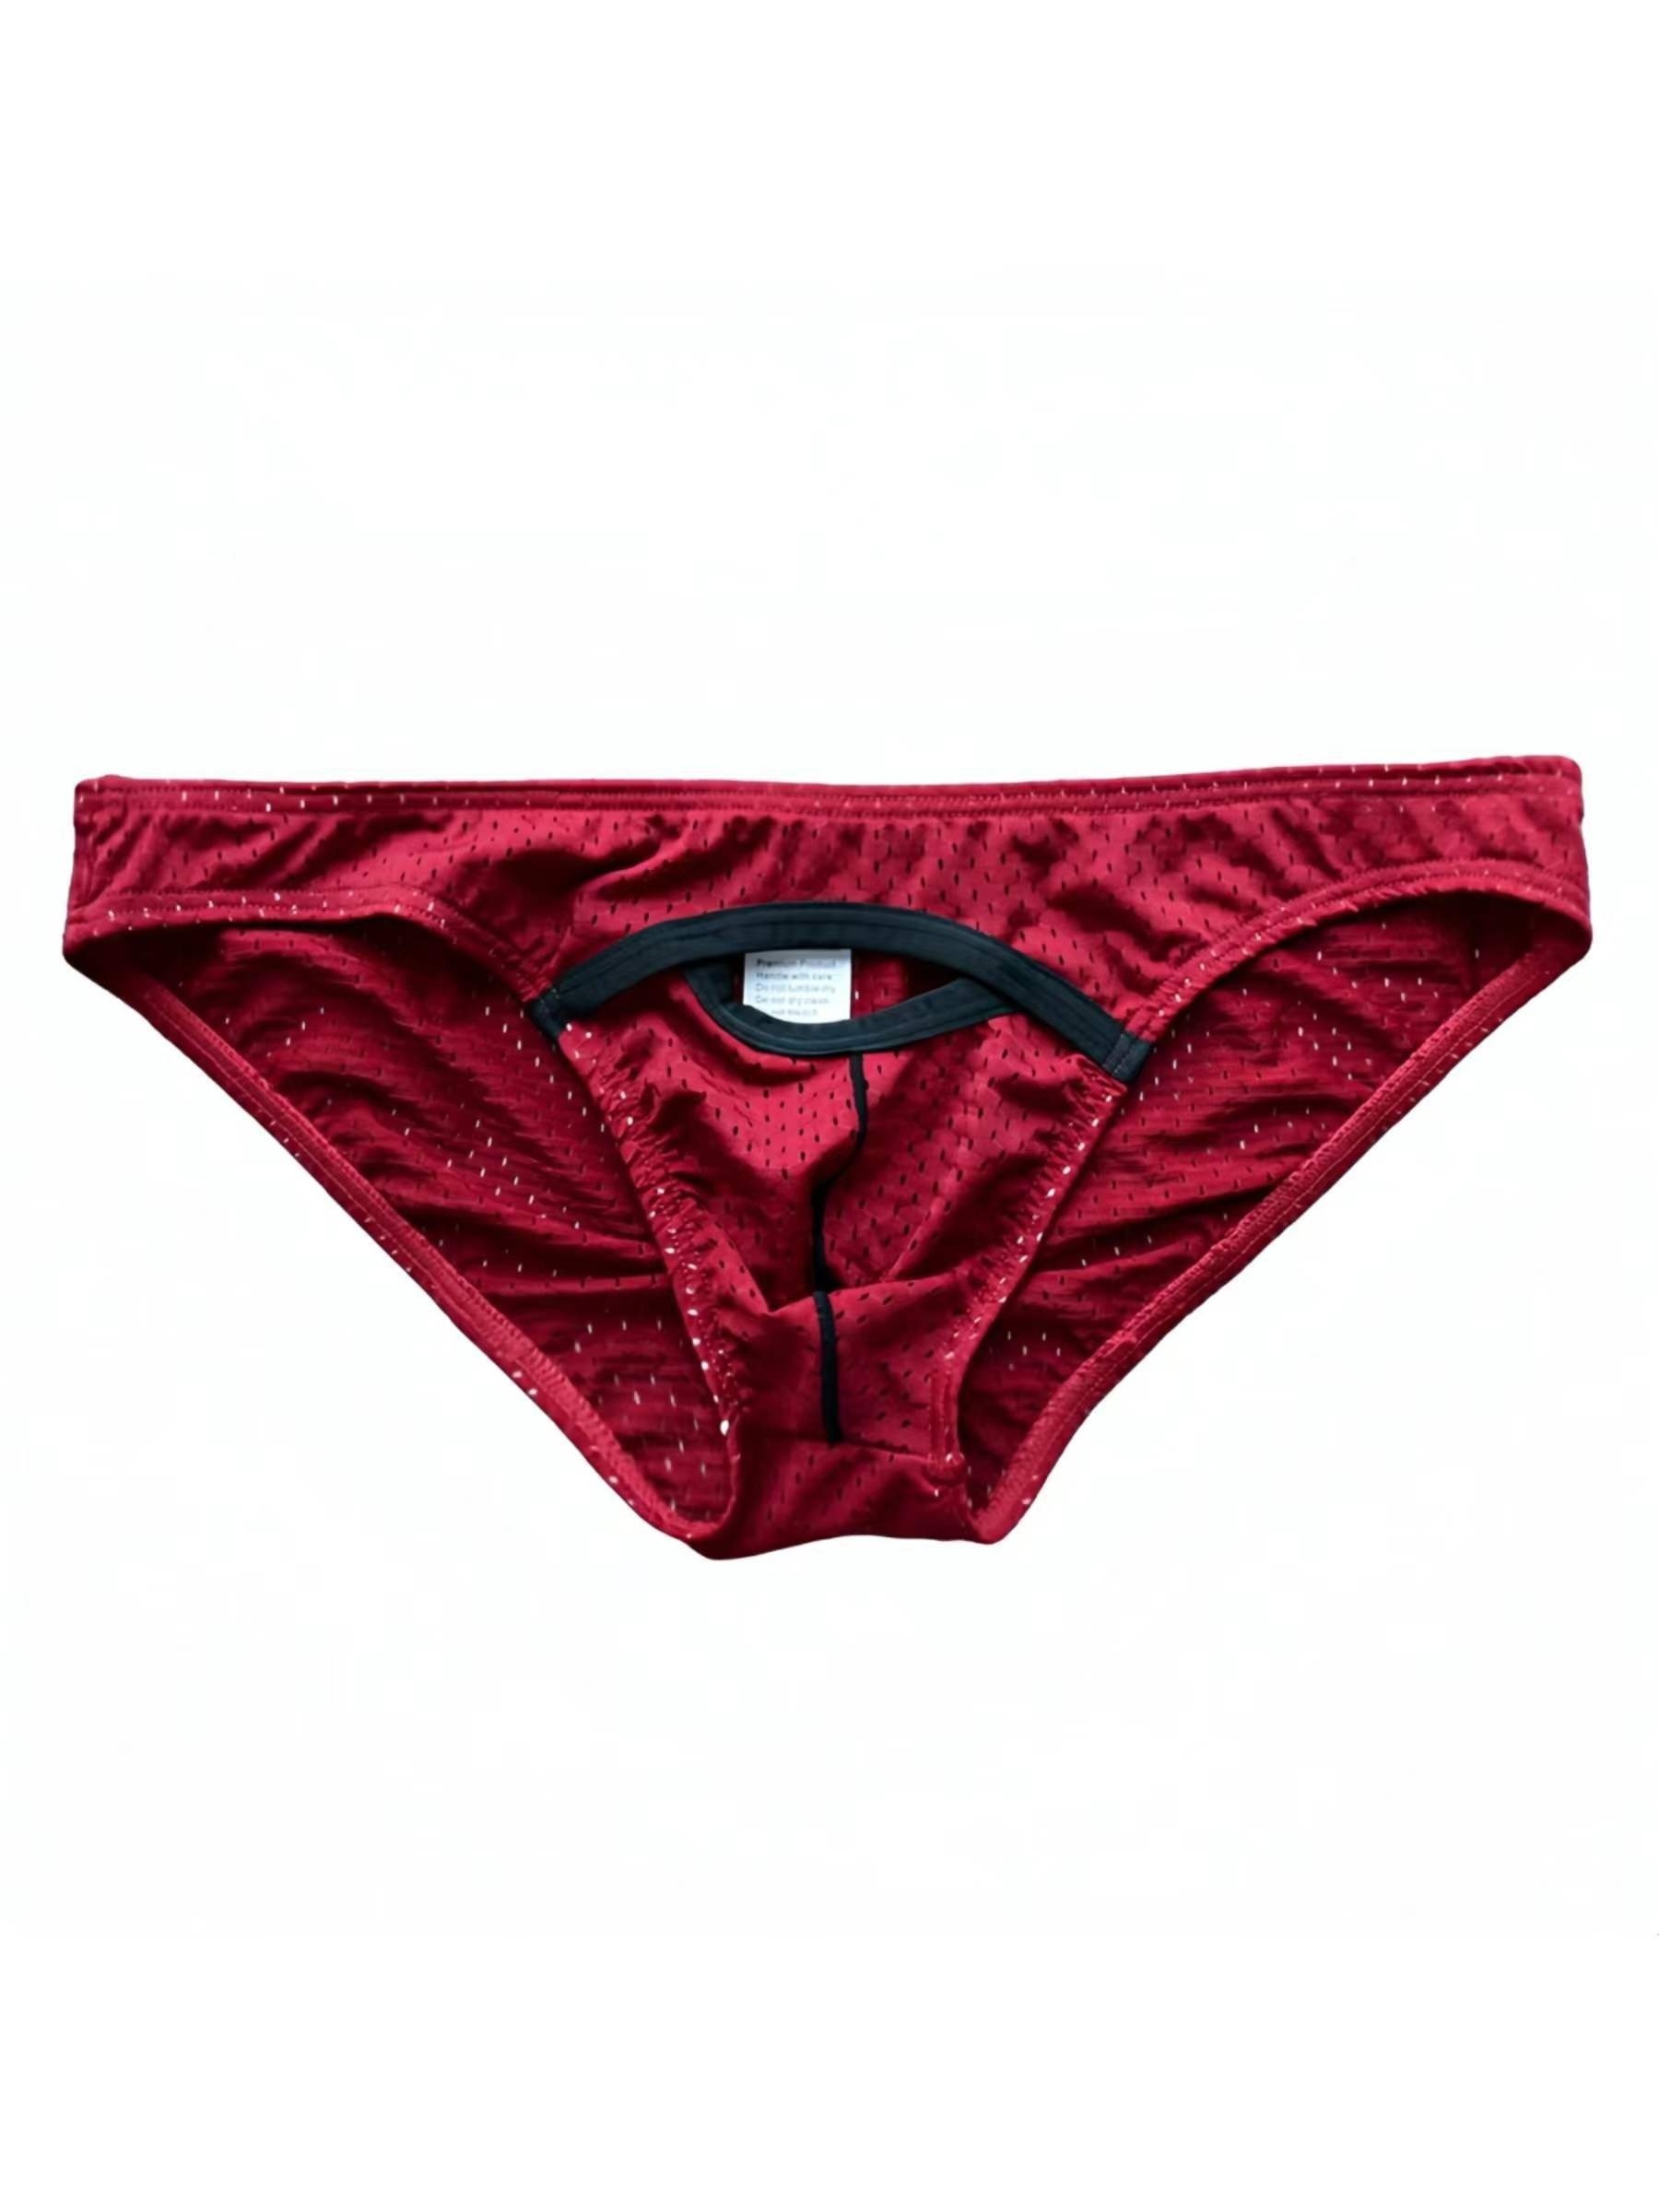 Panties Underwear Mens Underwear Boxers Ice Silk Convex Big Bag